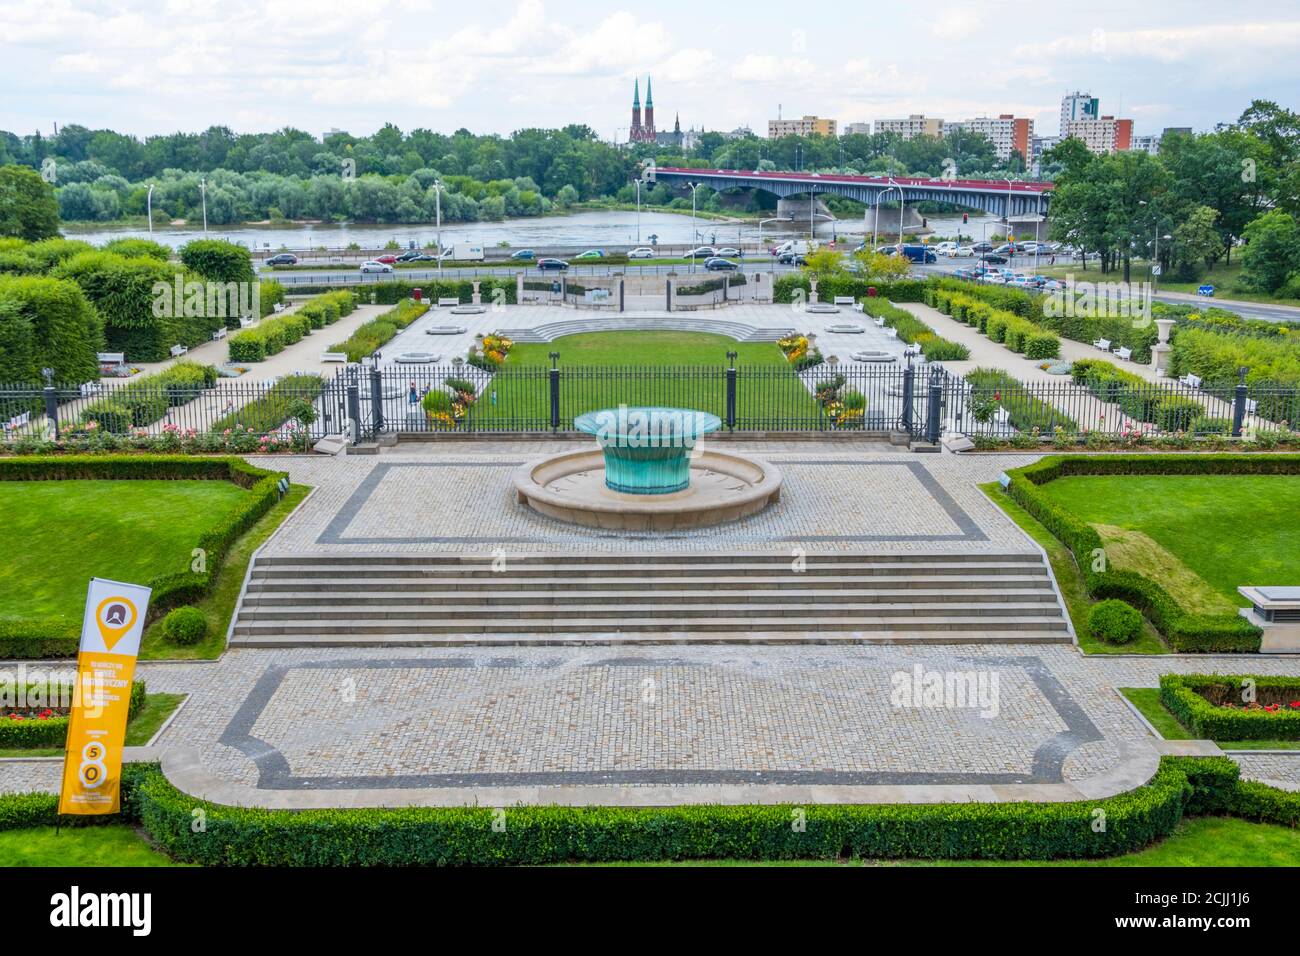 Ogrotty Zamku Klolewskiego, jardins du château royal de Varsovie, Stare Miasto, vieille ville, Varsovie, Pologne Banque D'Images